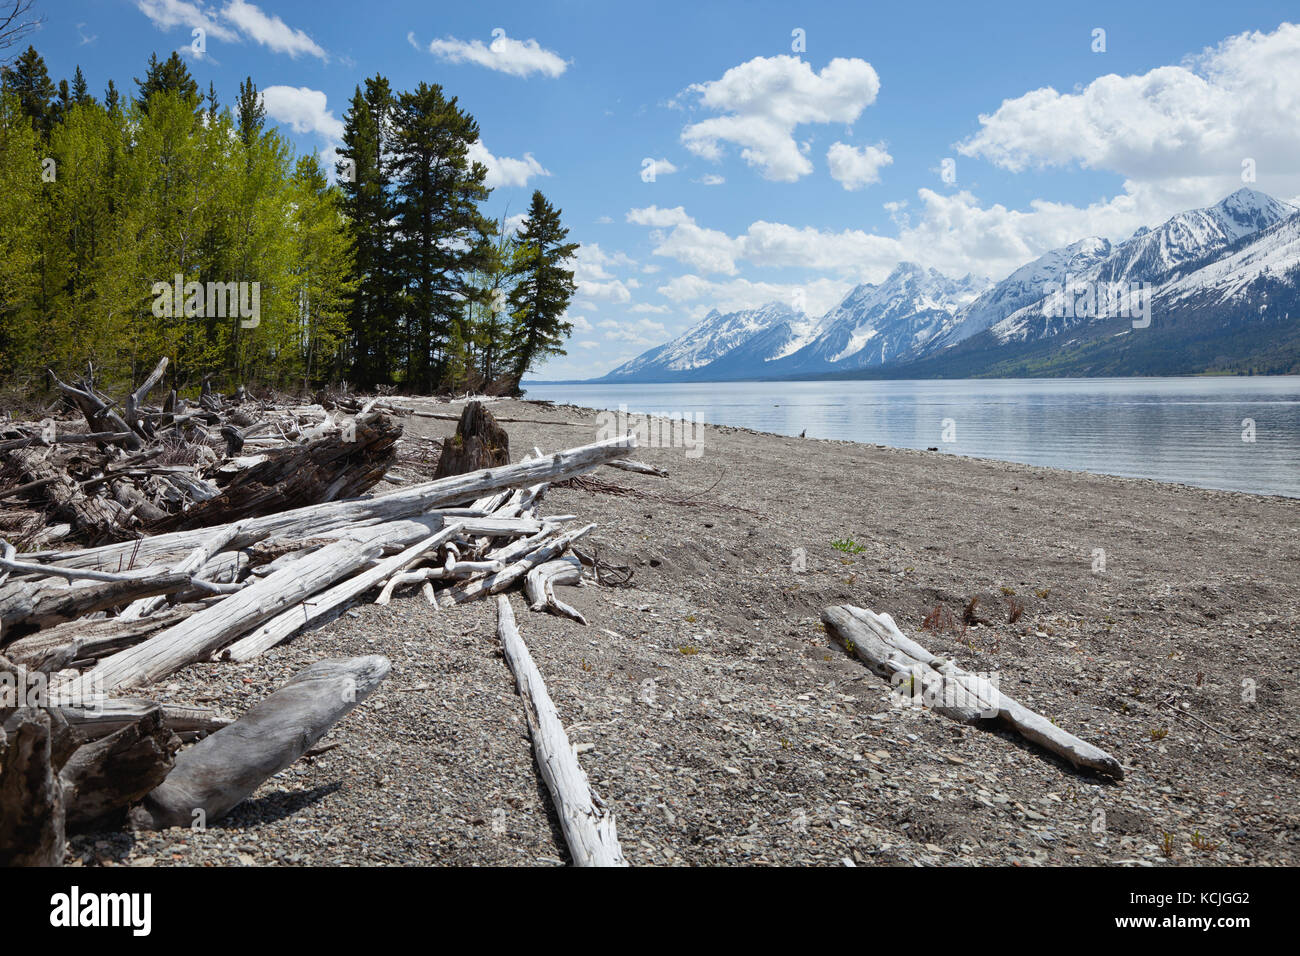 Lewis Lake below Grand Teton mountain range with trees and driftwood on the shore Stock Photo